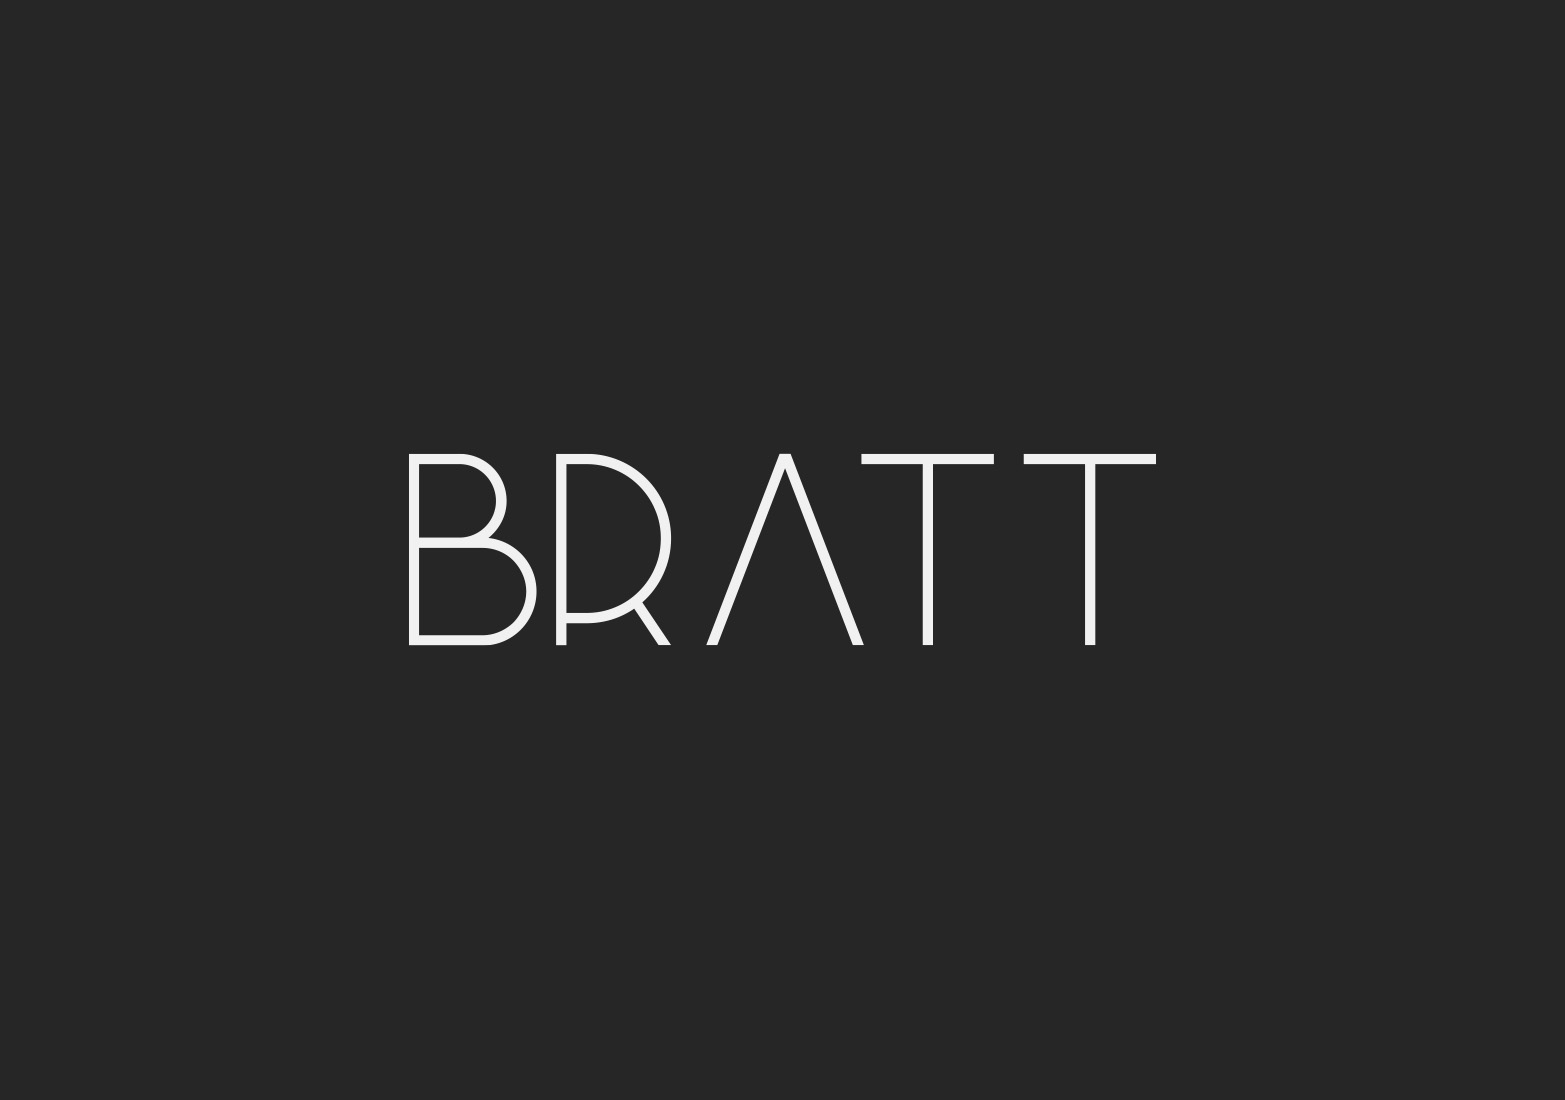 Bratt: Branding